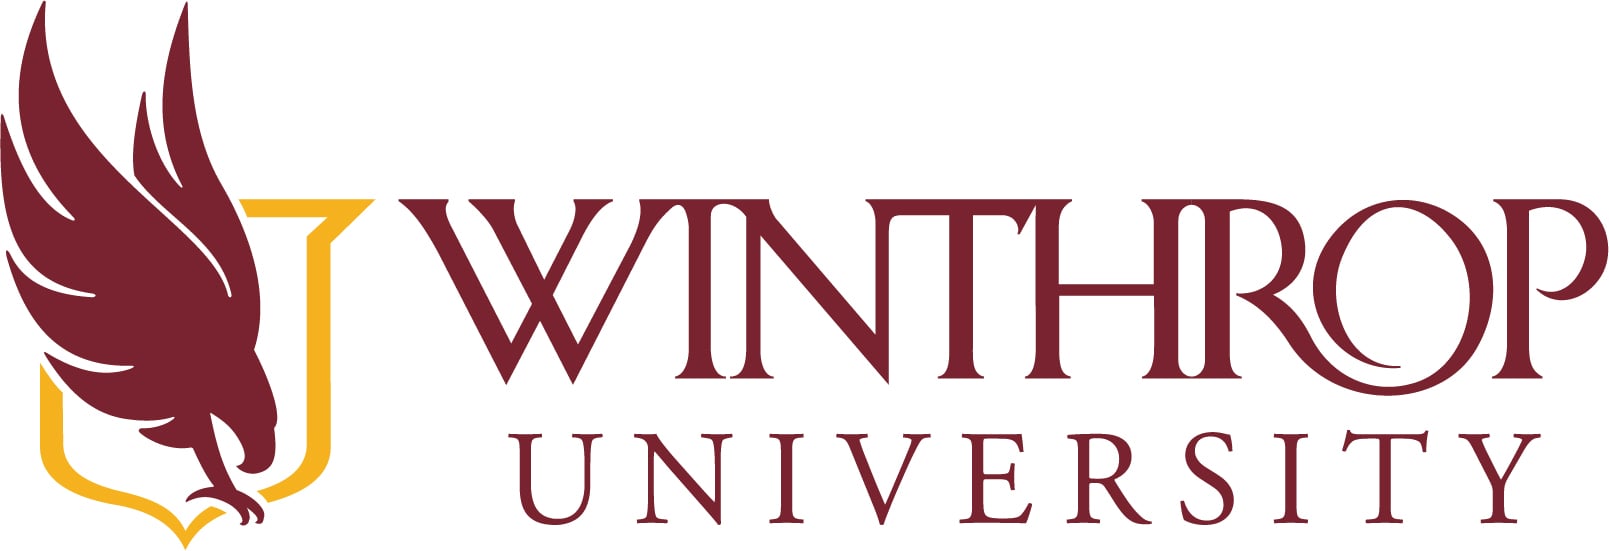 Inside Higher Ed Winthrop University